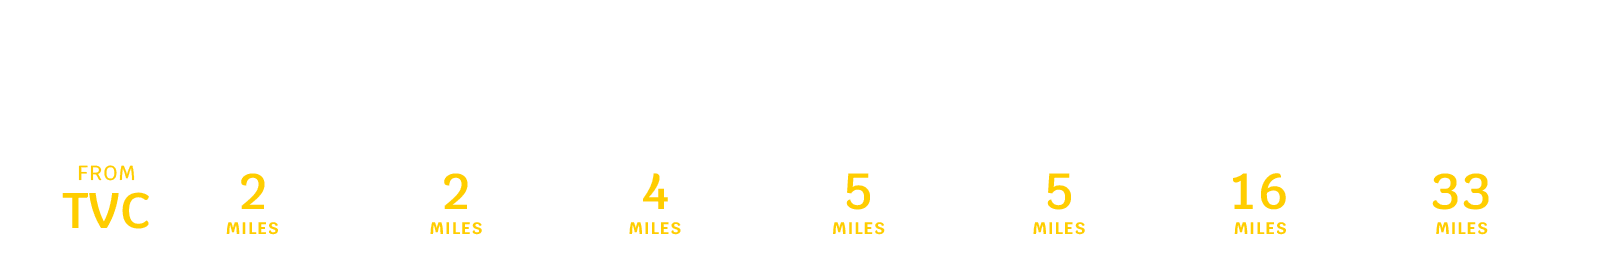 Traverse City, MO distance chart